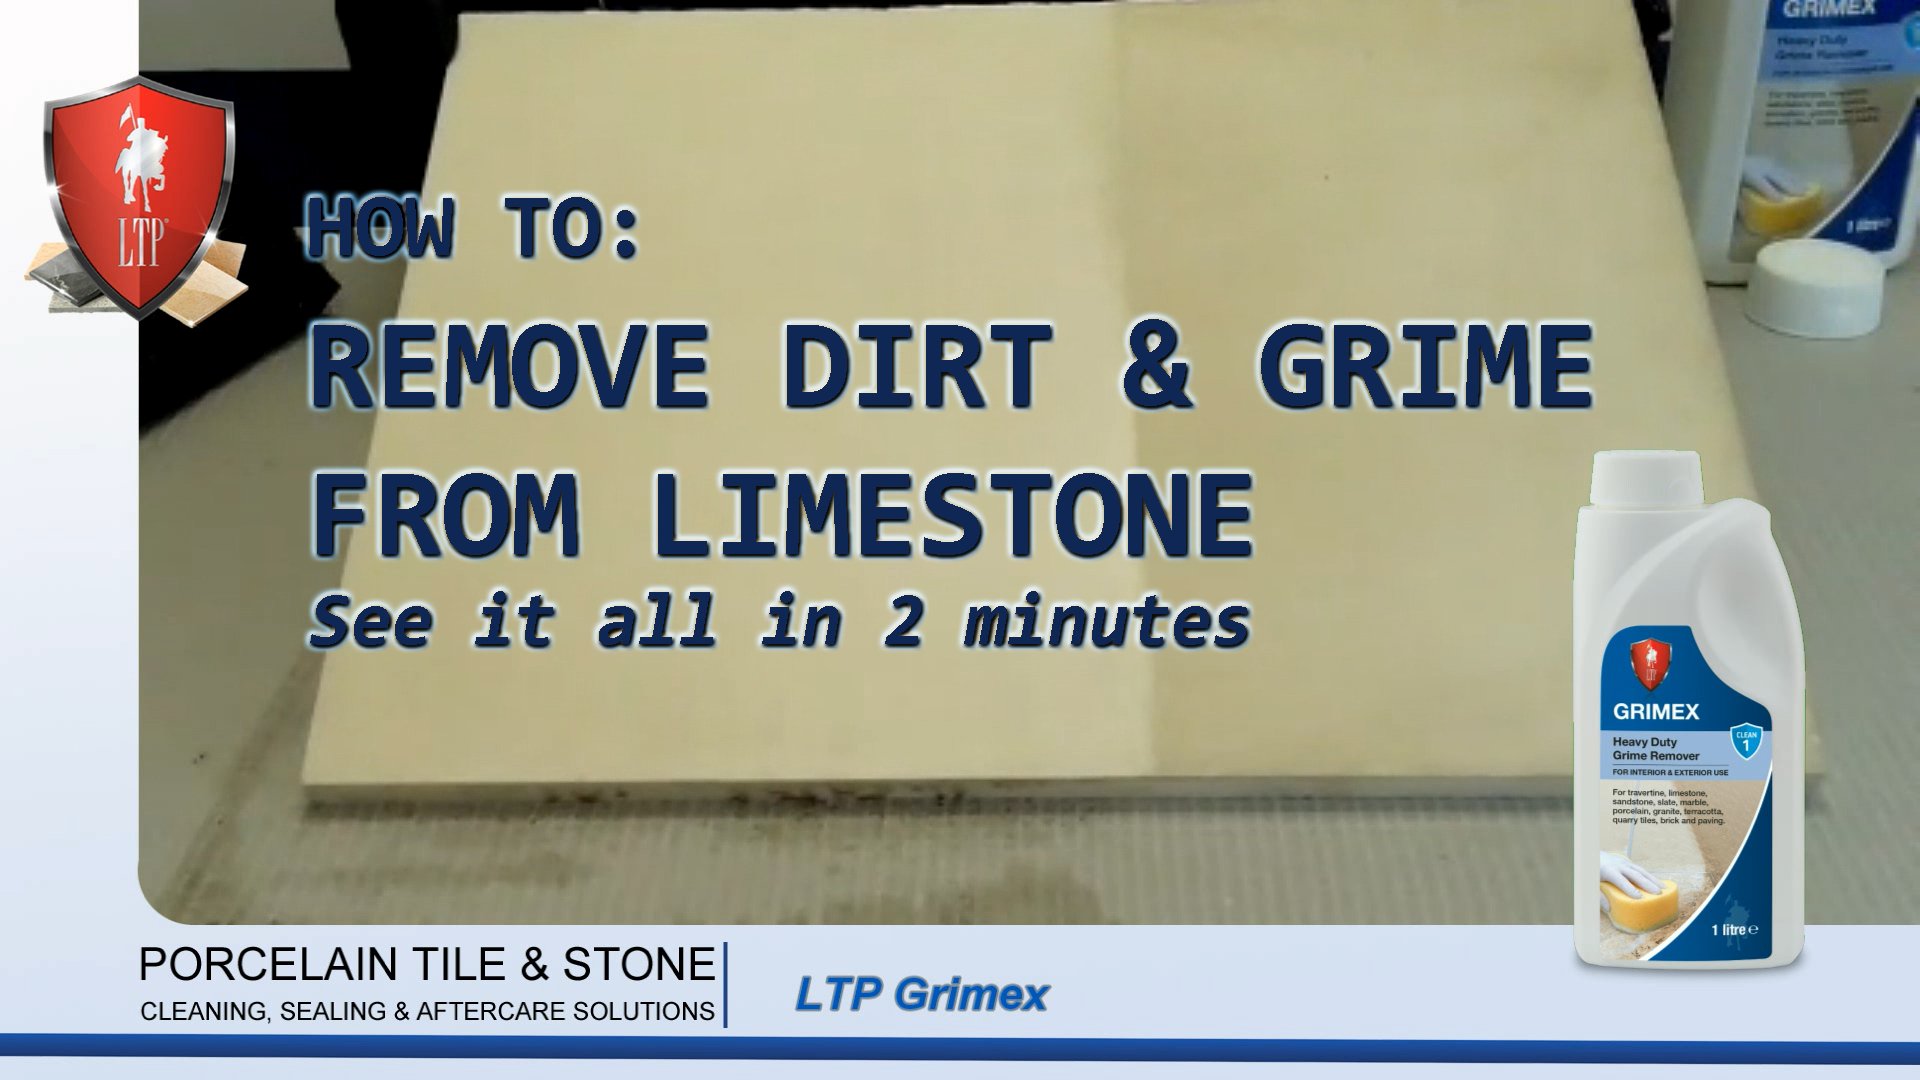 8. How do I Remove Dirt & Grime from limestone Thumbnail.jpg